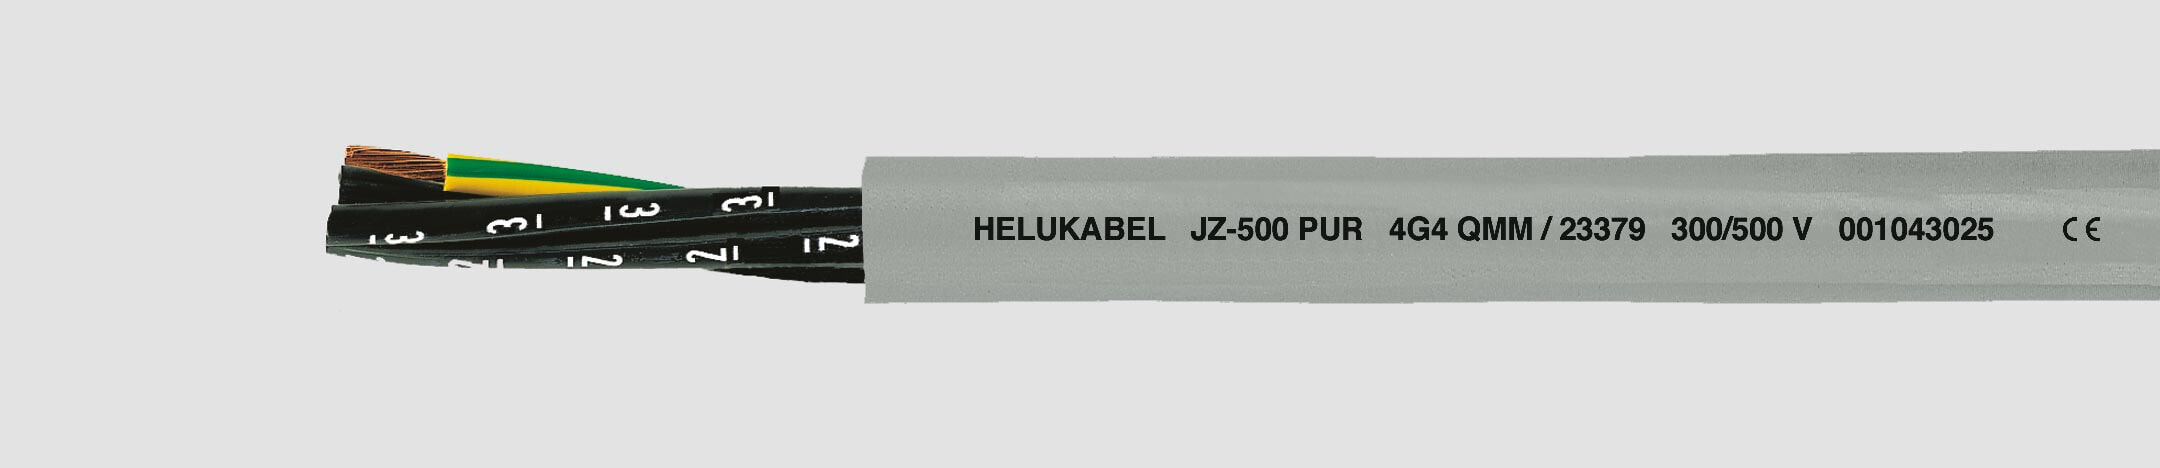 Helukabel 23334 - Low voltage cable - Grey - Polyvinyl chloride (PVC) - Cooper - -15 - 80 °C - -40 - 80 °C